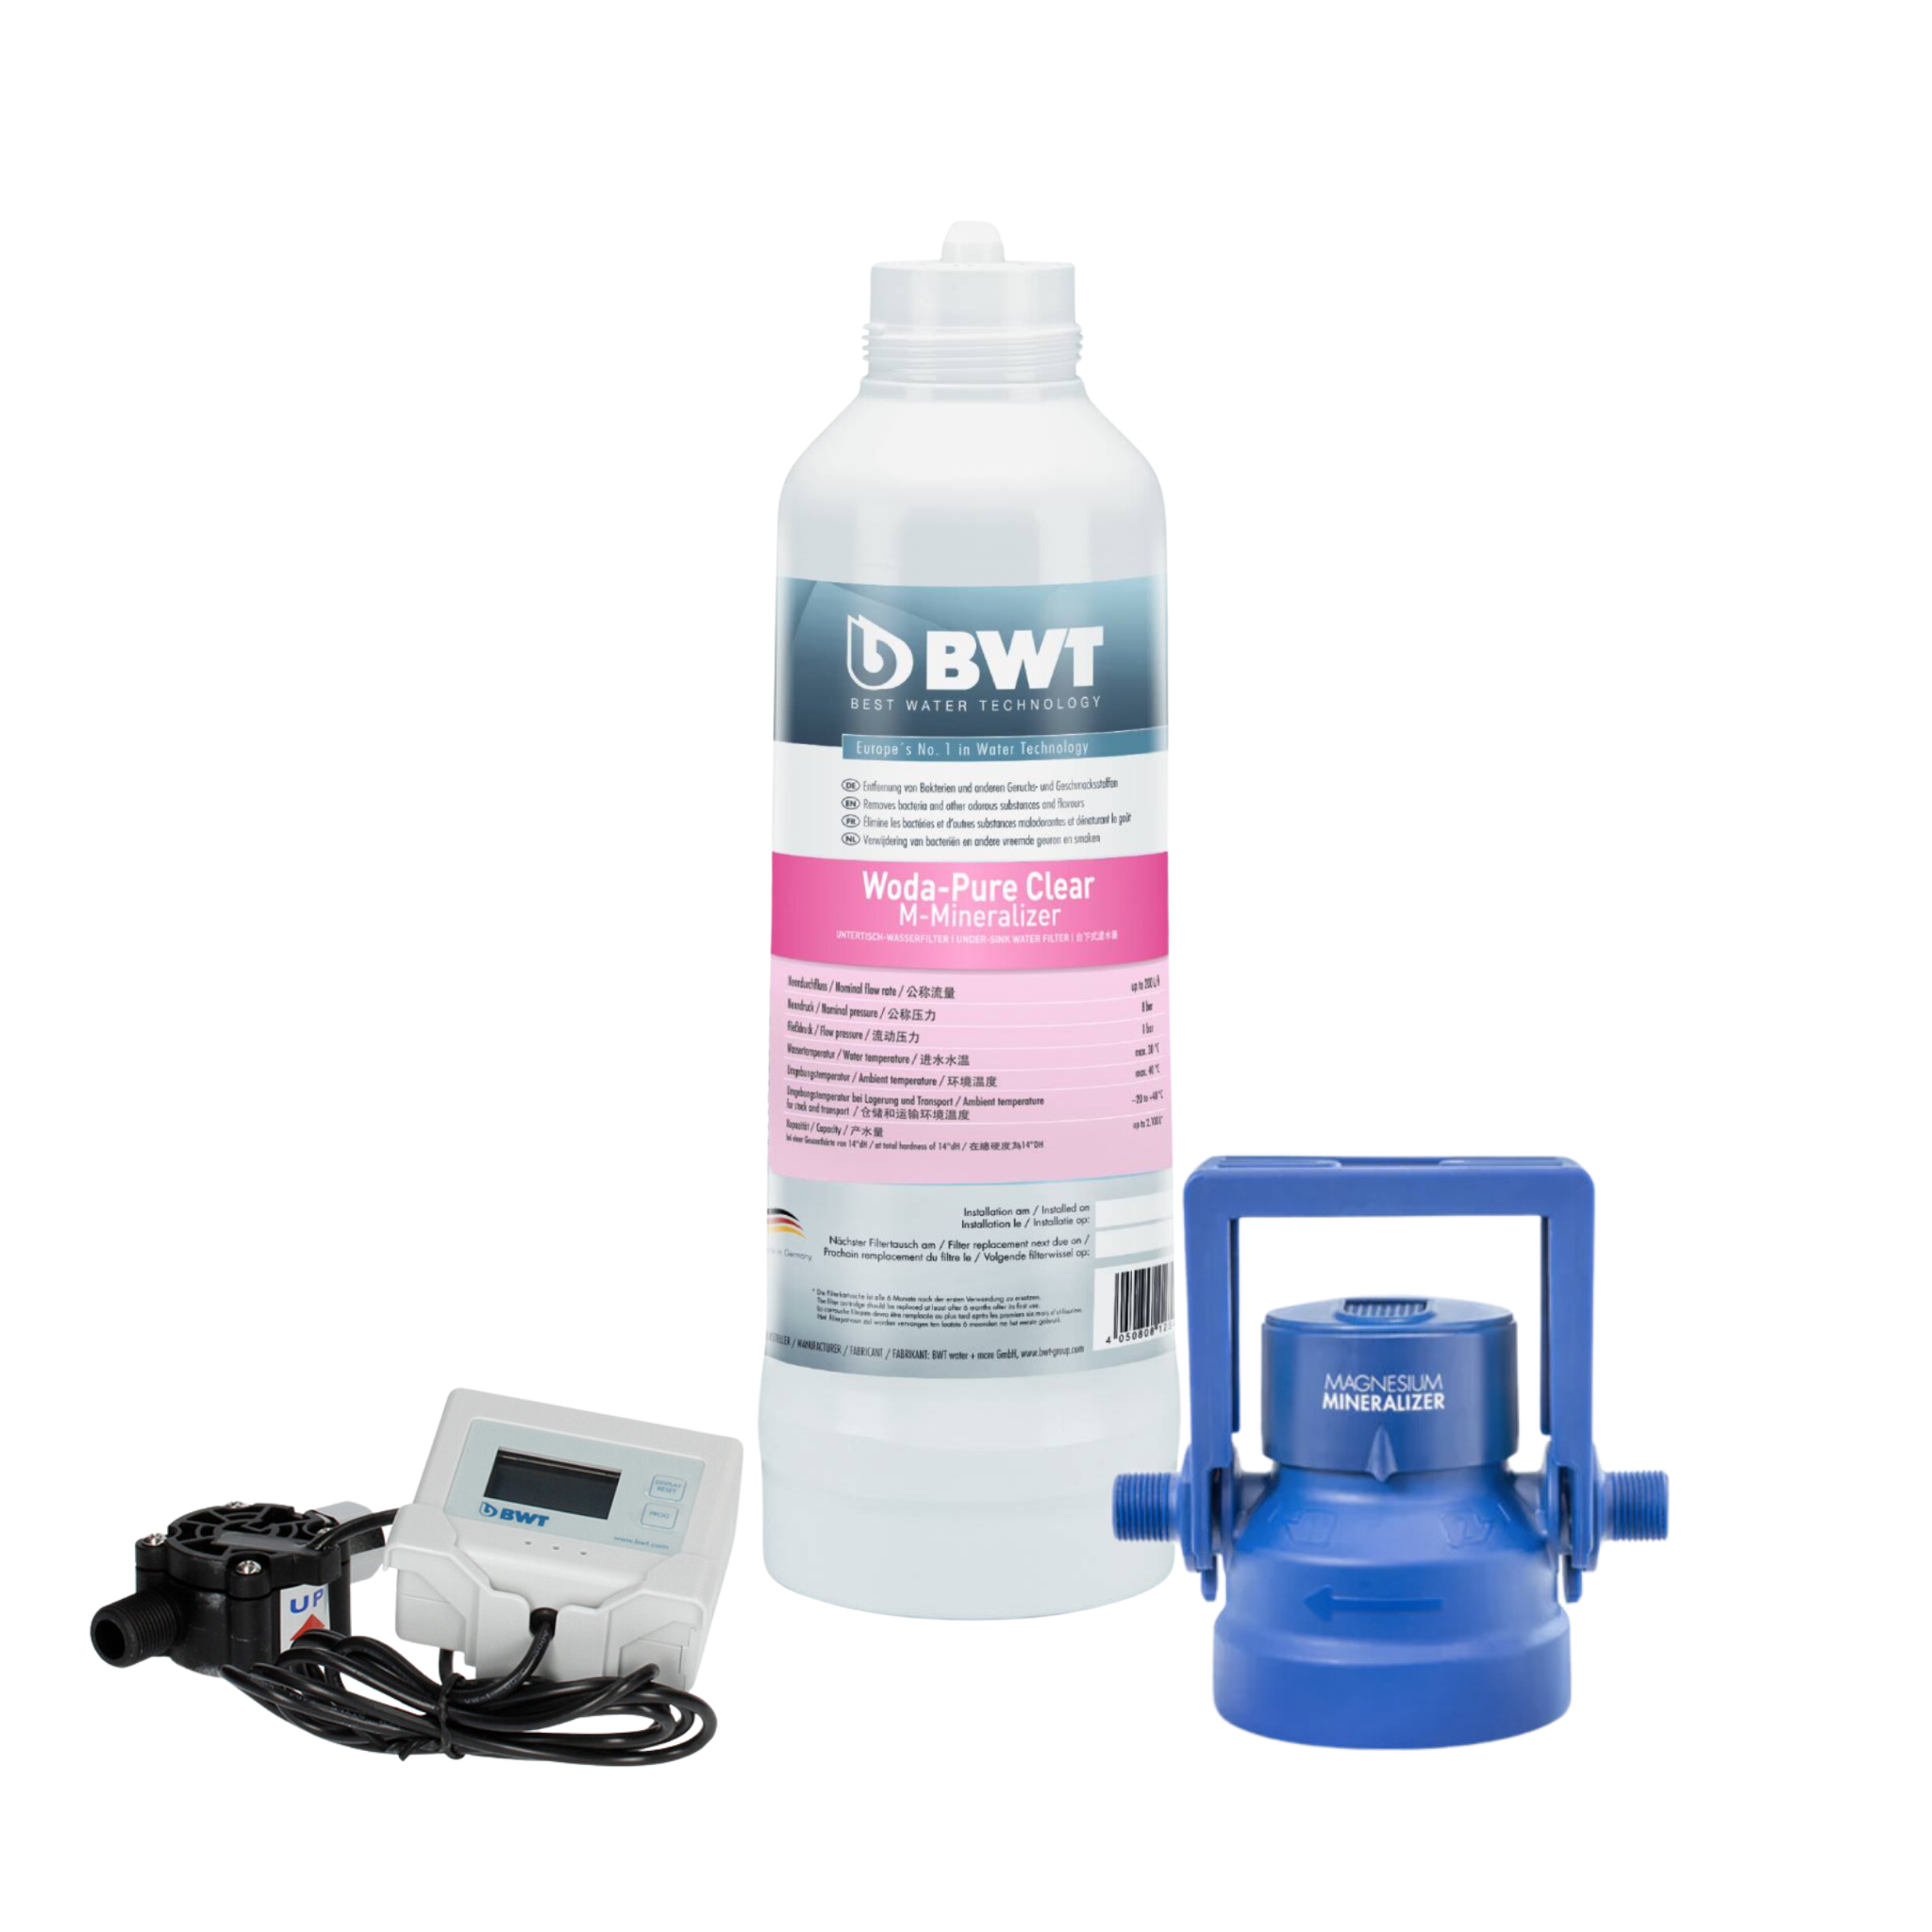 BWT Woda-Pure Clear Mineralizer filter starter set